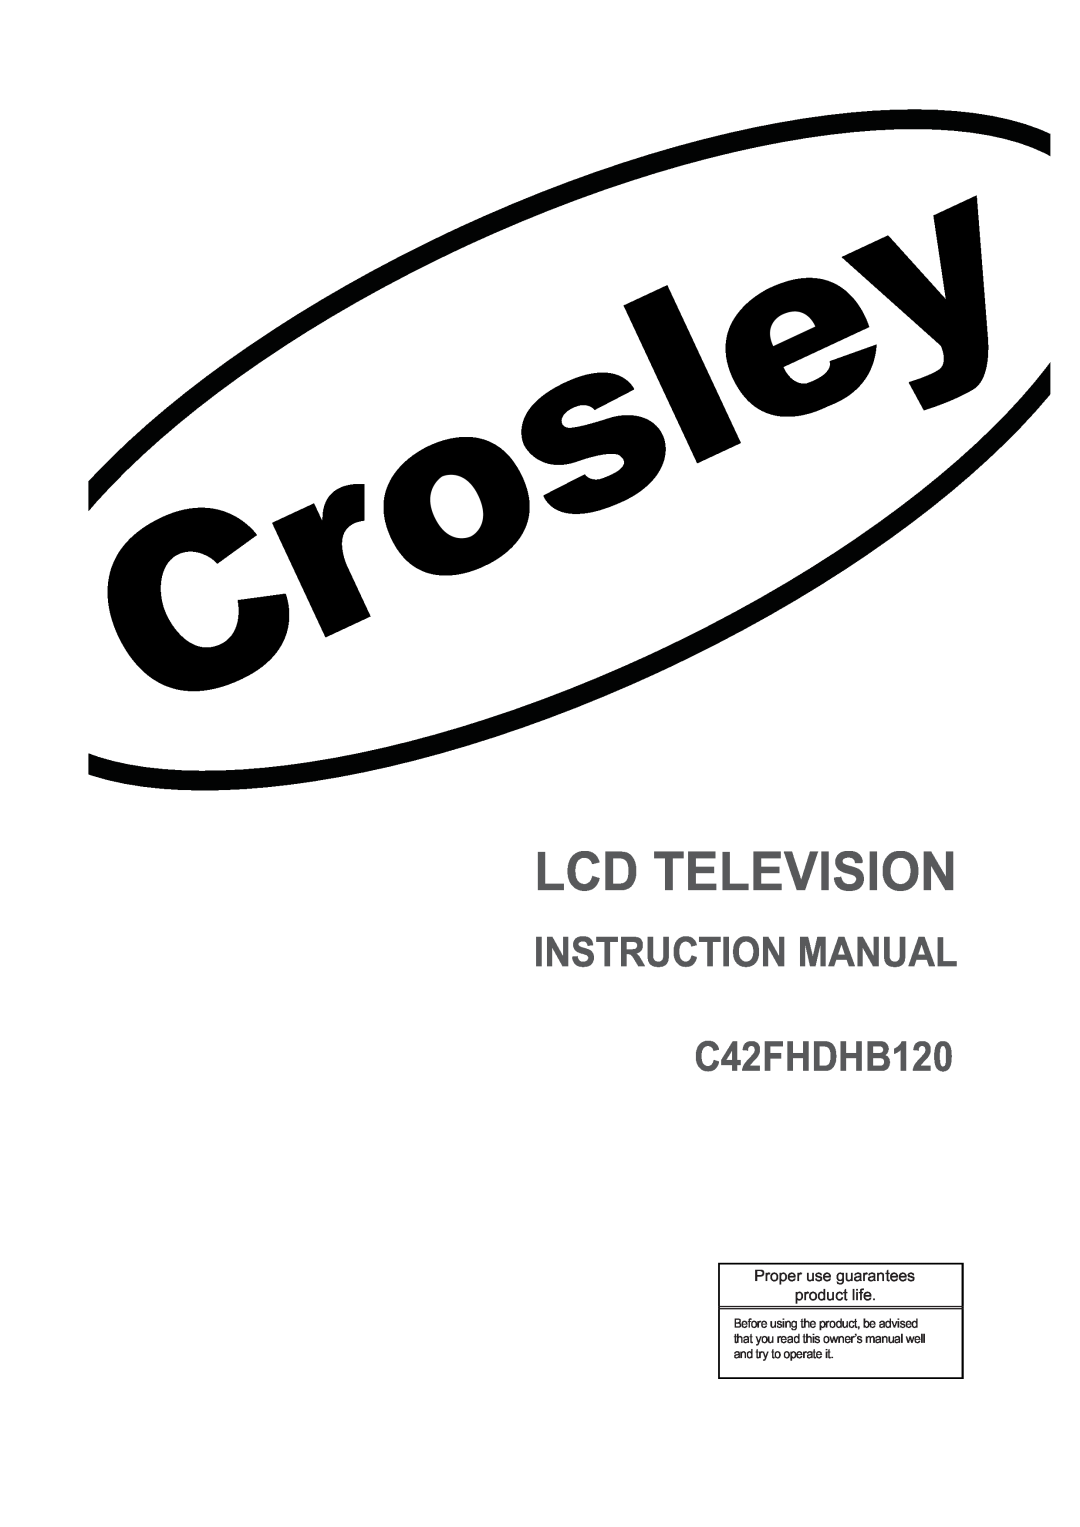 Crosley owner manual Lcd Television, INSTRUCTION MANUAL C42FHDHB120, Proper use guarantees product life 